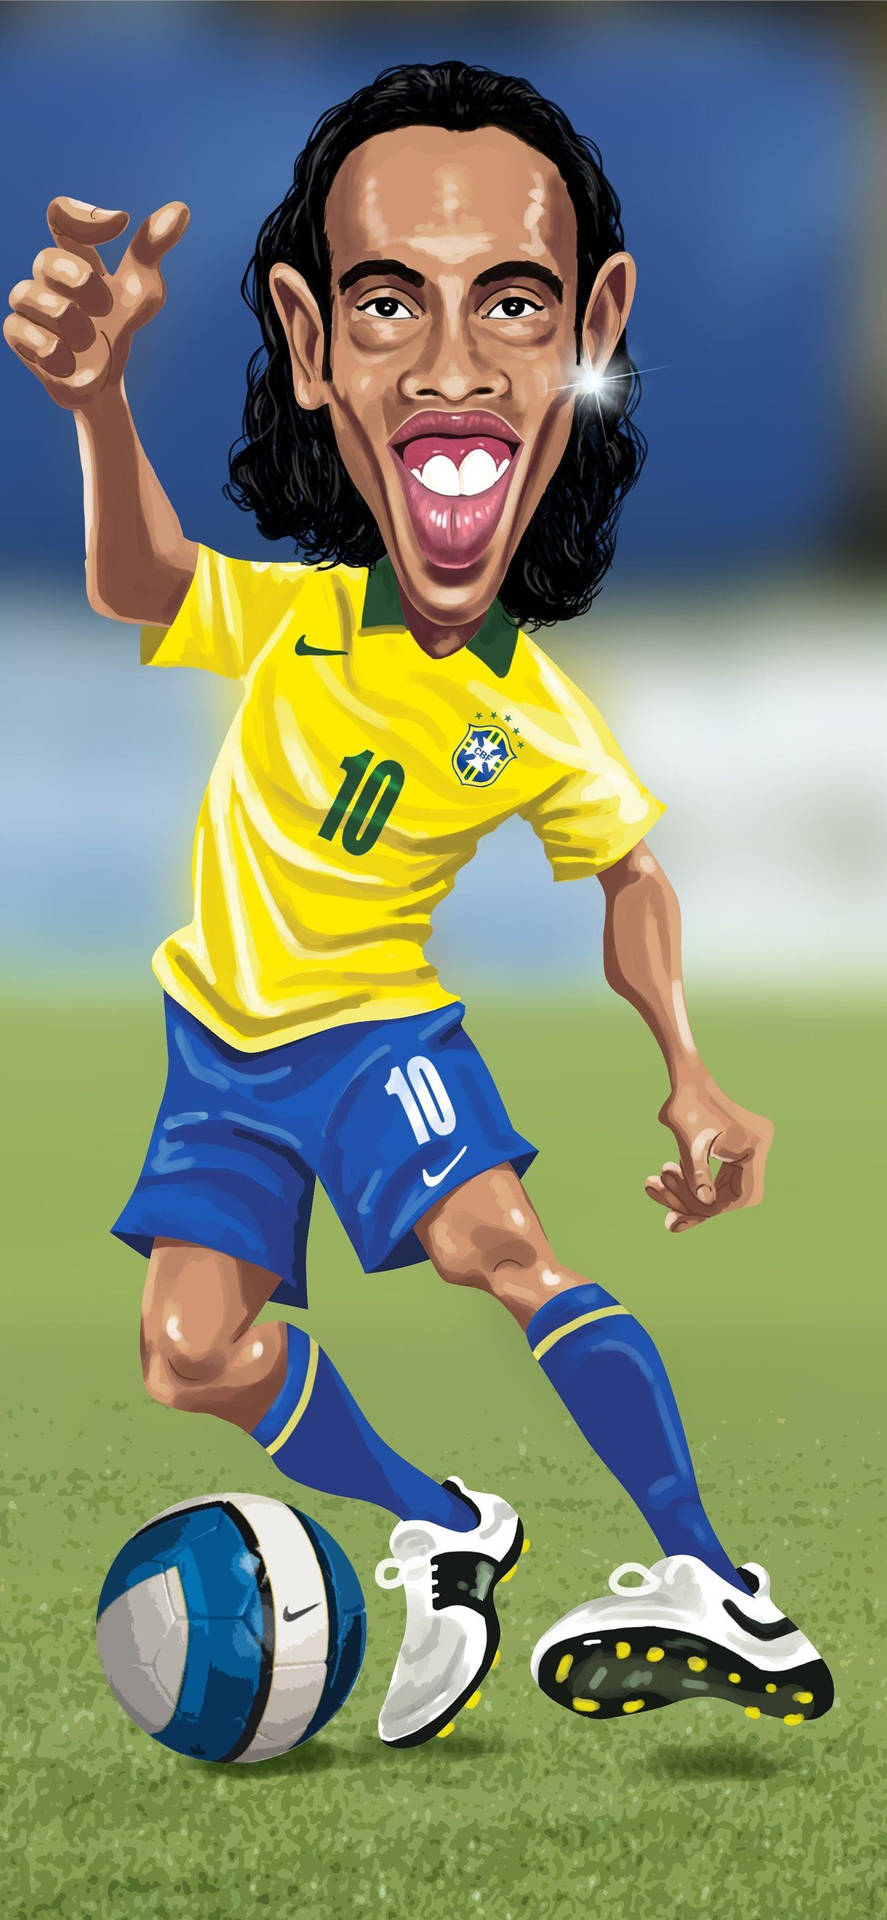 Funny Ronaldinho Caricature Background